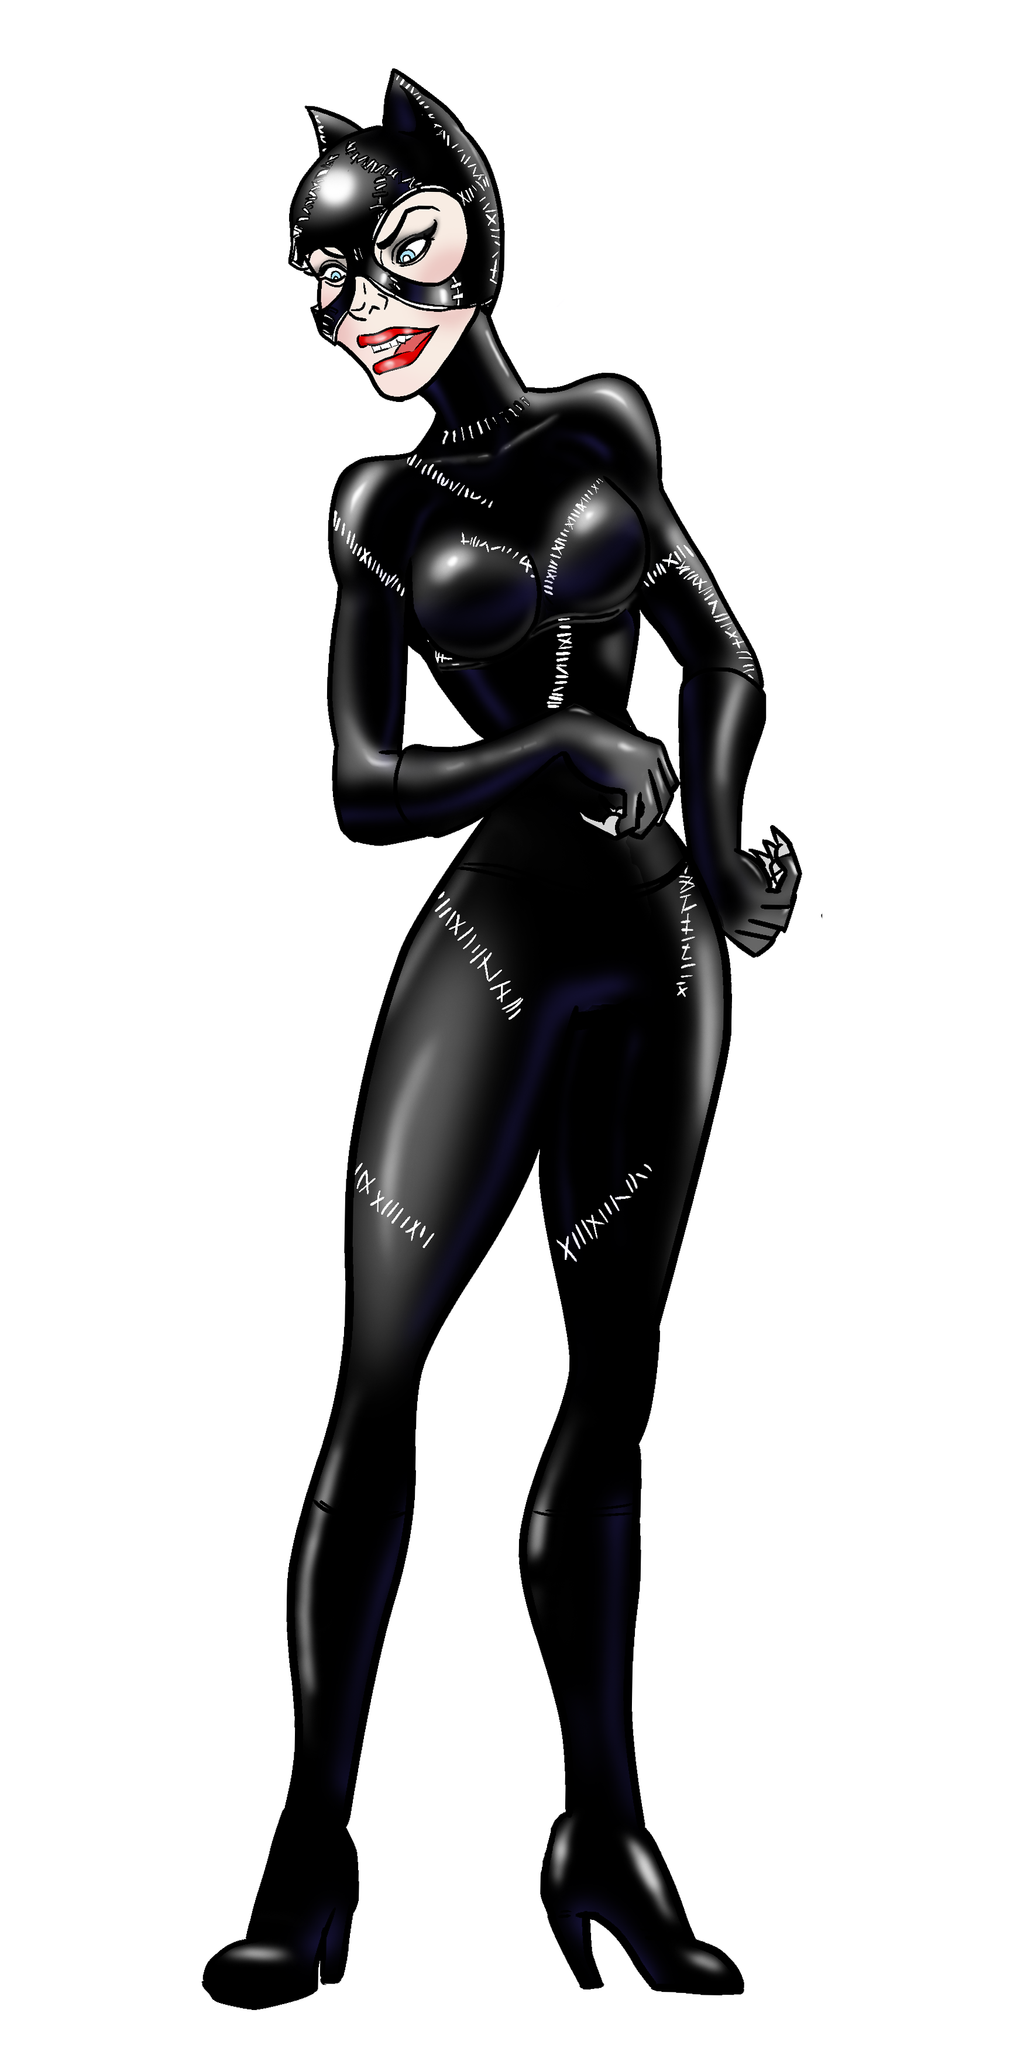 Batman Returns Catwoman by MightyFooda on DeviantArt